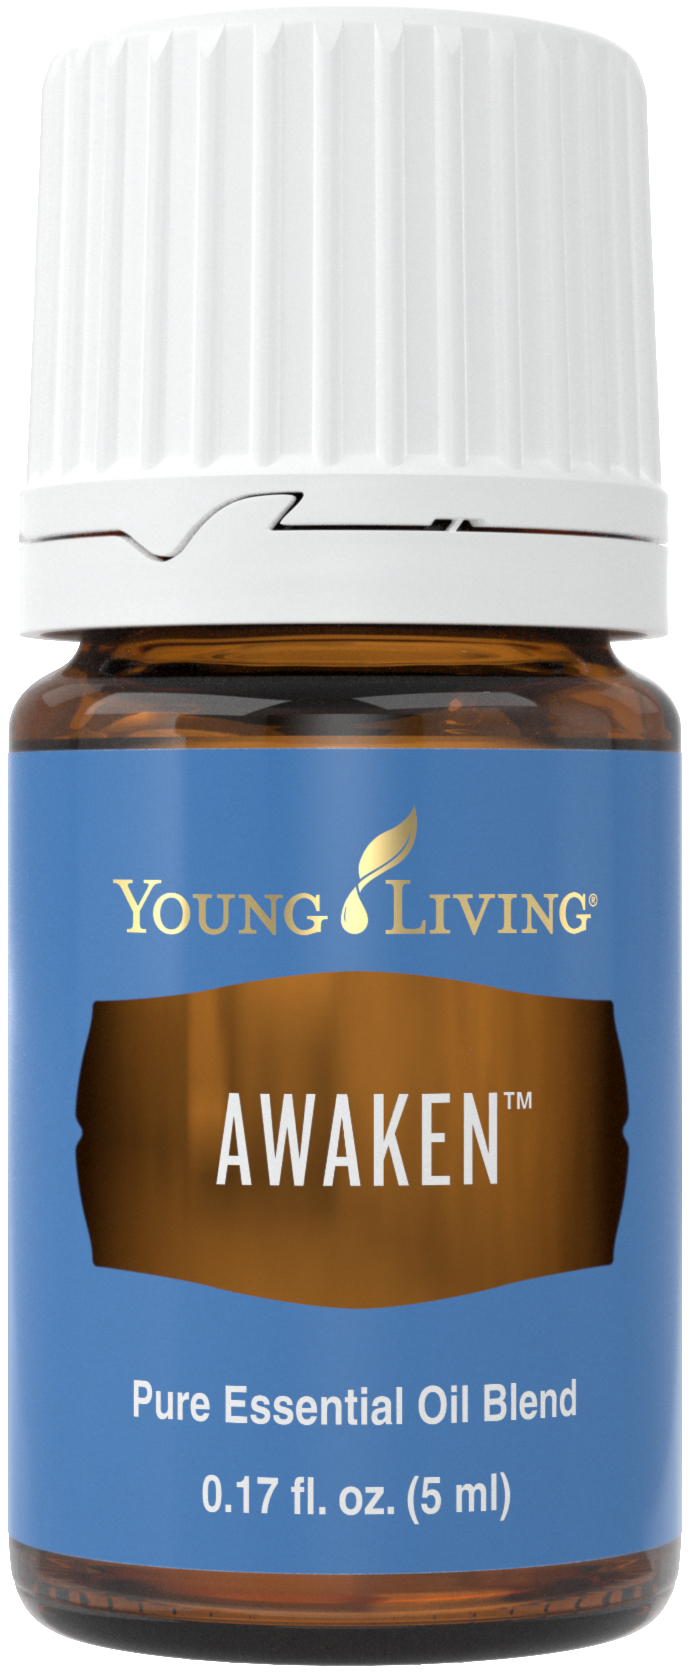 Awaken Essential Oil Blend - Young Living Essential Oils